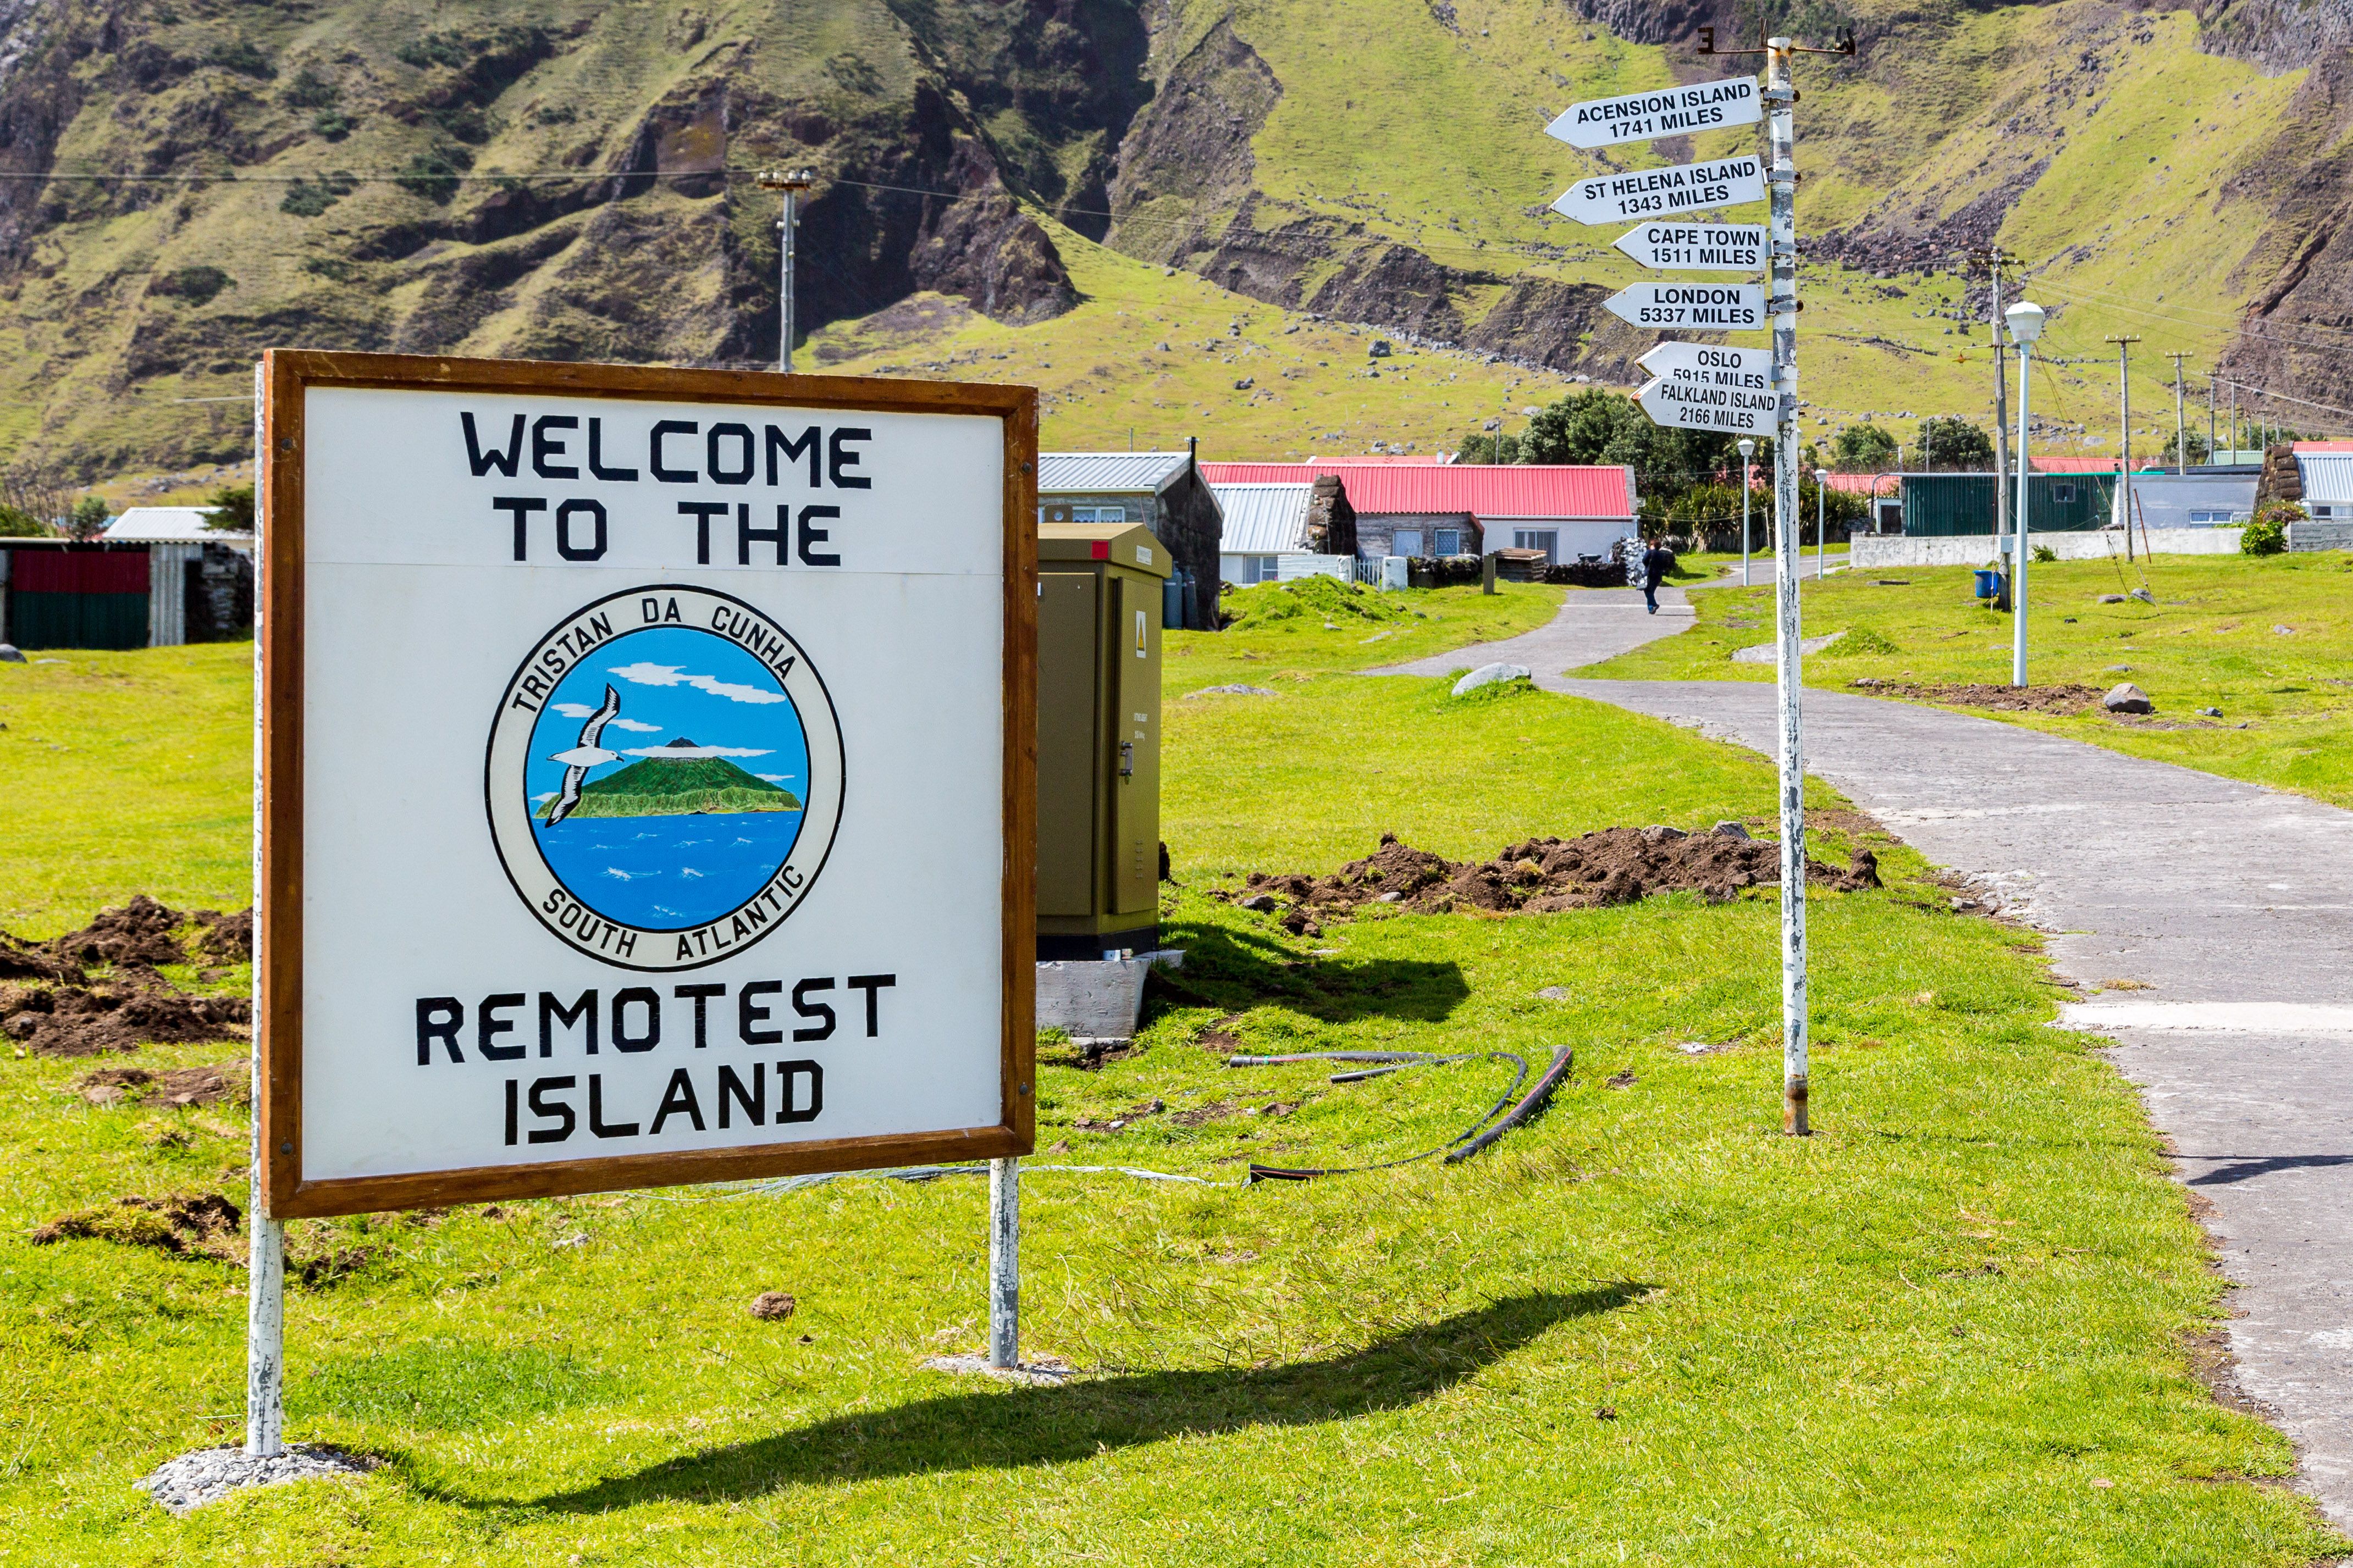 The "most remote island" sign on Tristan da Cunha island